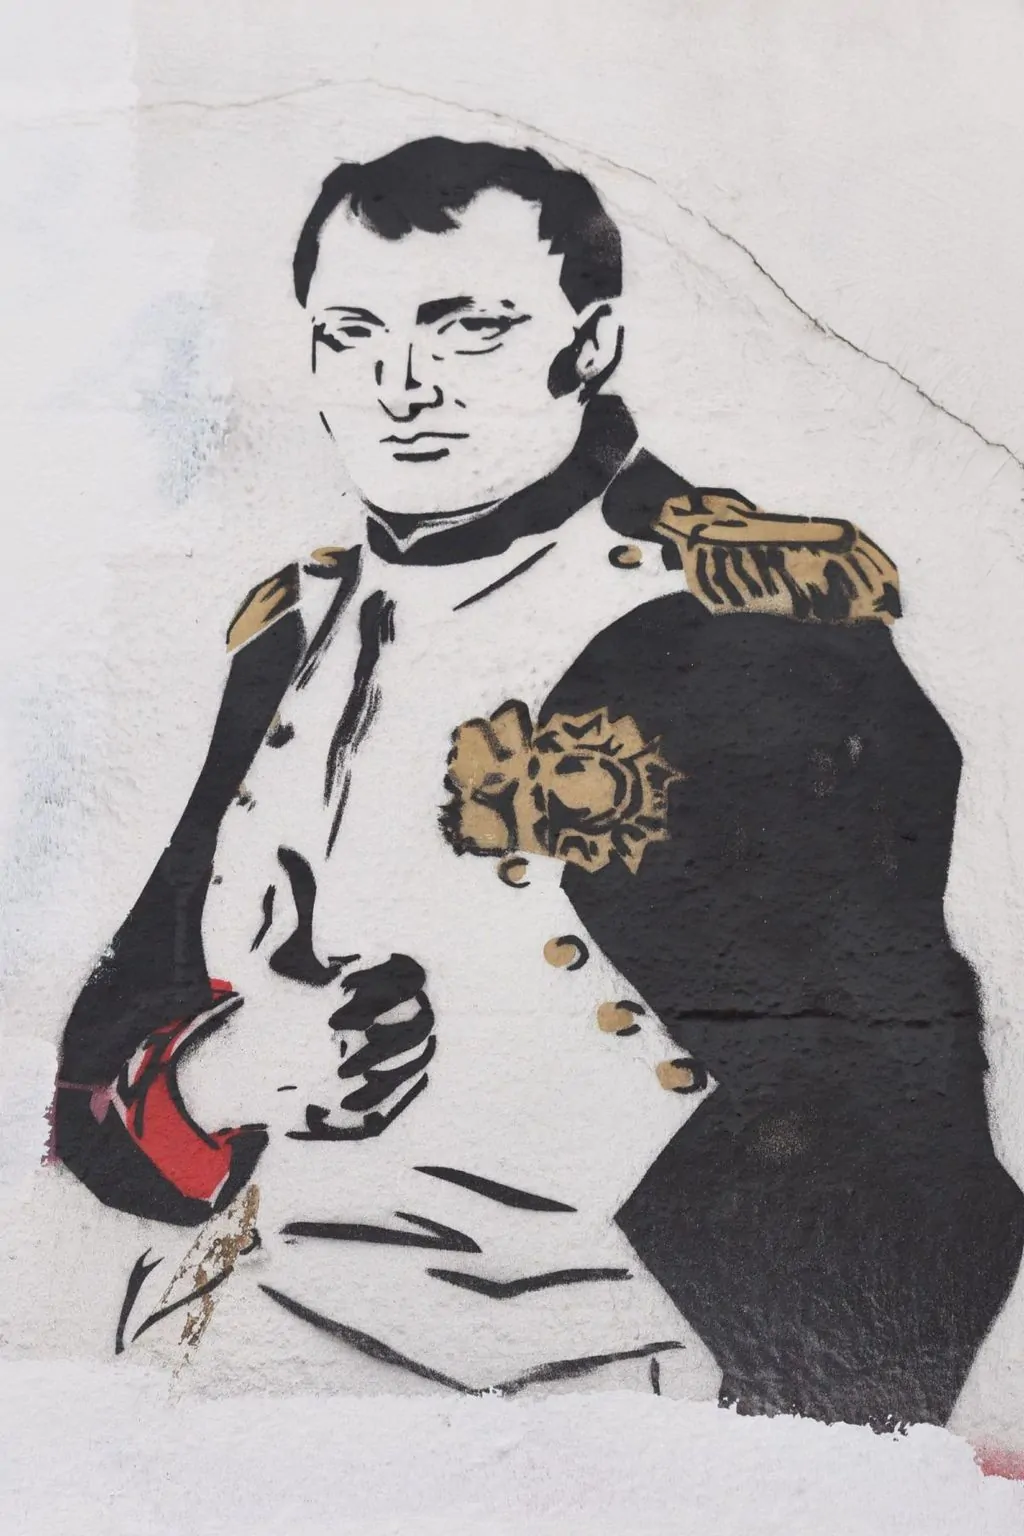 Banksy Street Art, Brighton England